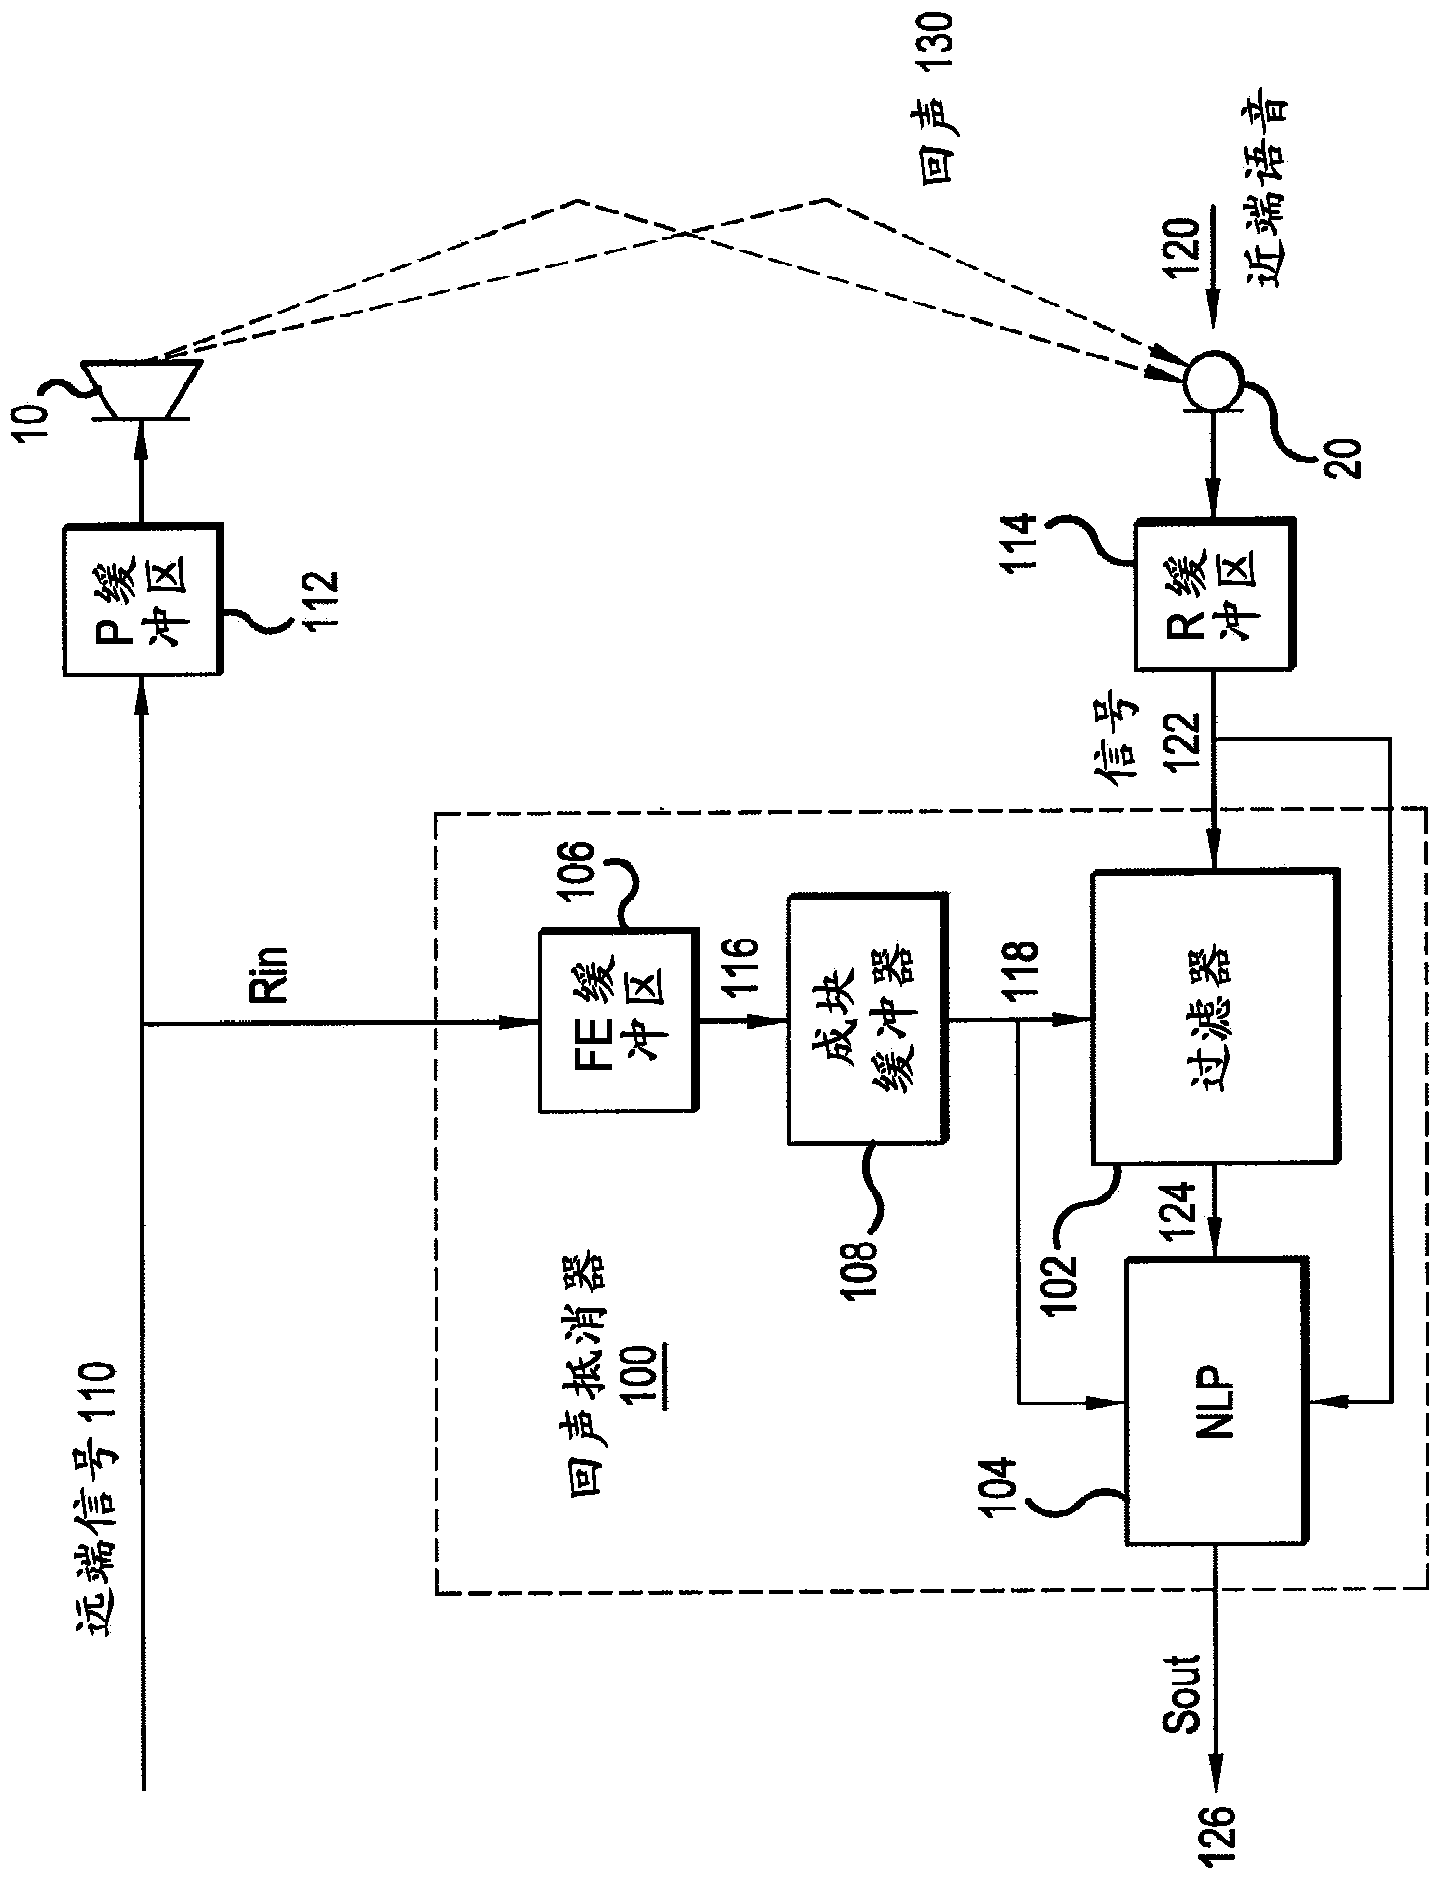 Clock drift compensation method and apparatus